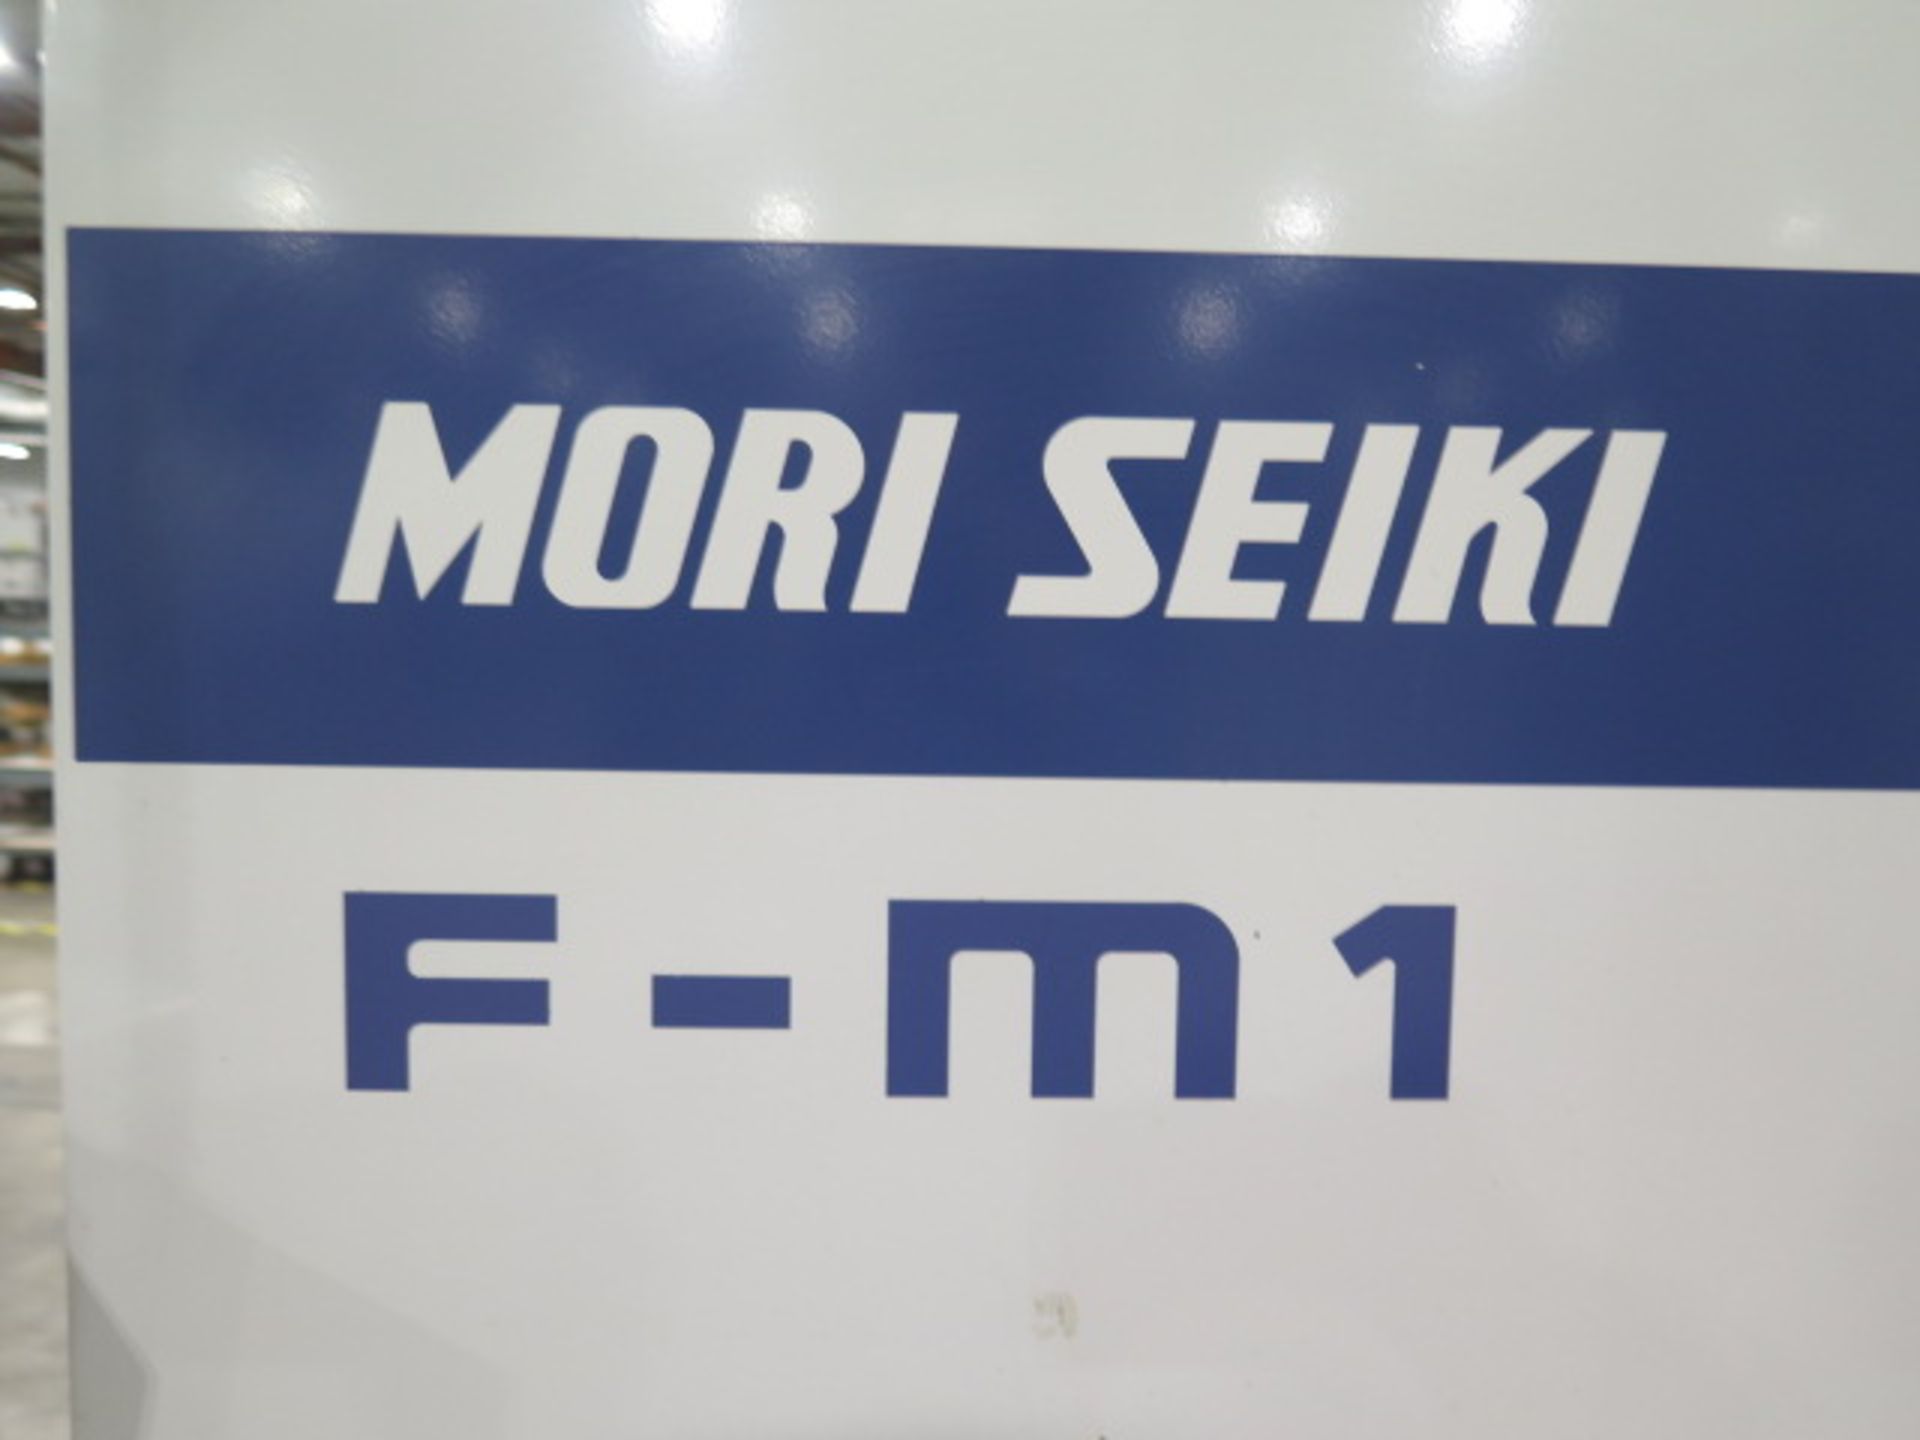 1997 Mori Seiki F-M1 CNC Vertical Machining Center s/n 569 w/ Mori Seiki MSC-521 Controls,SOLD AS IS - Image 12 of 15